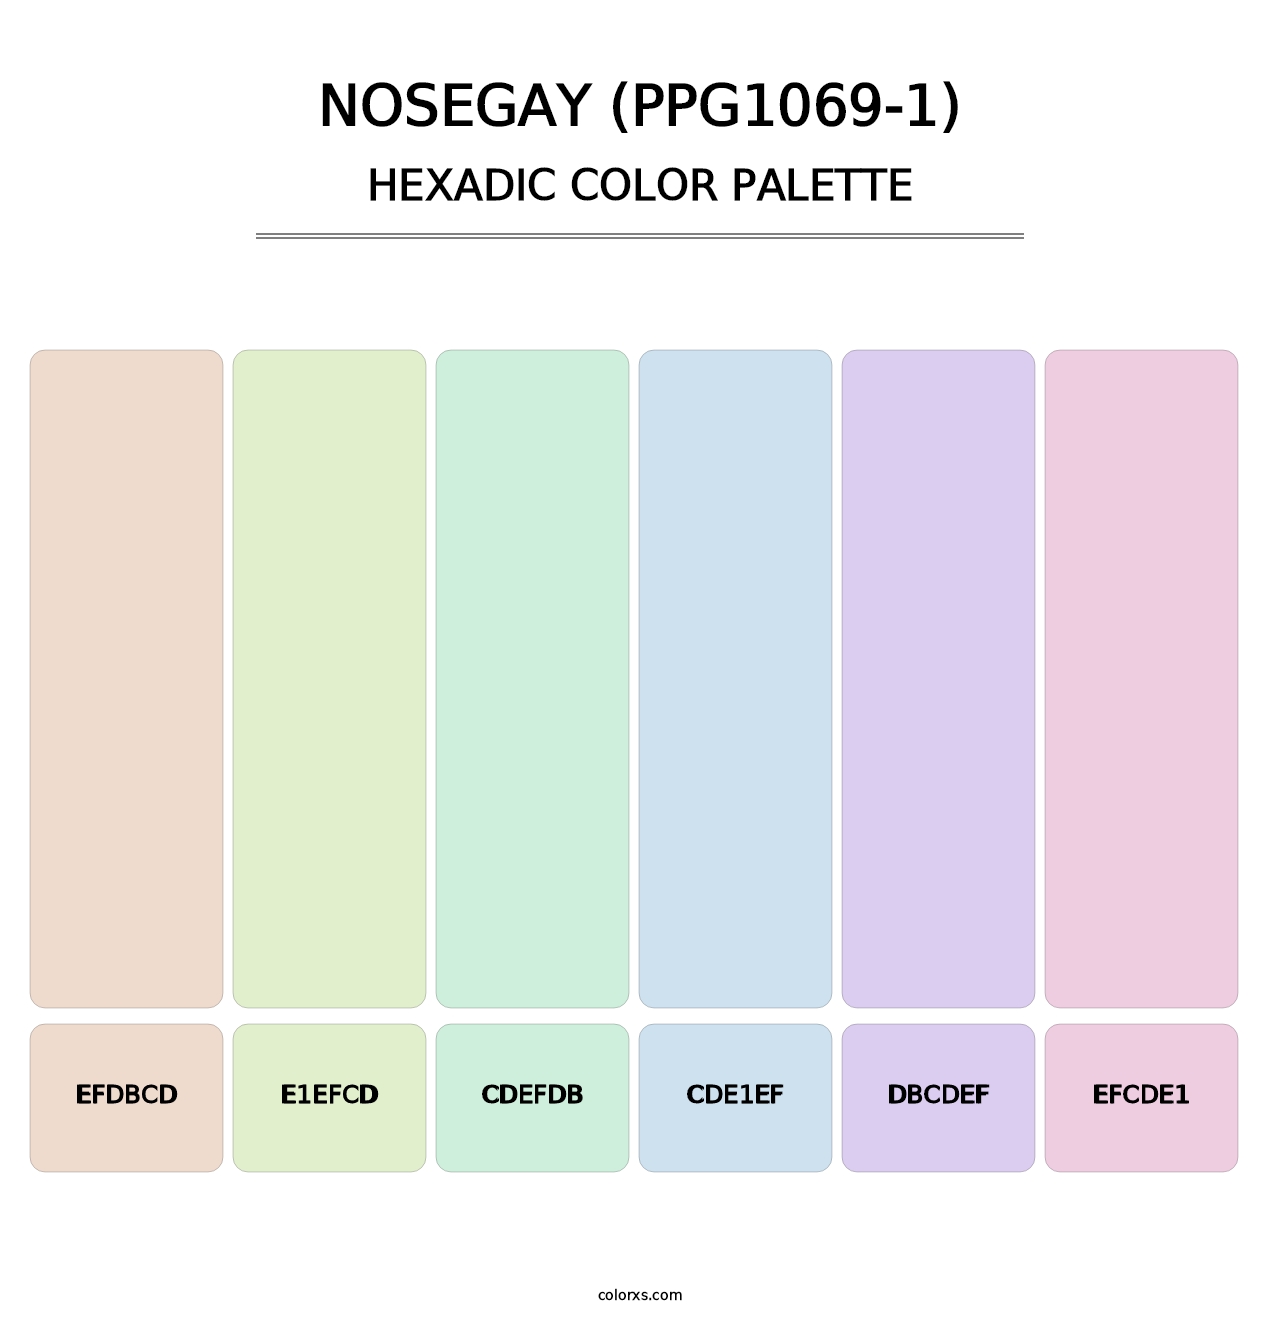 Nosegay (PPG1069-1) - Hexadic Color Palette